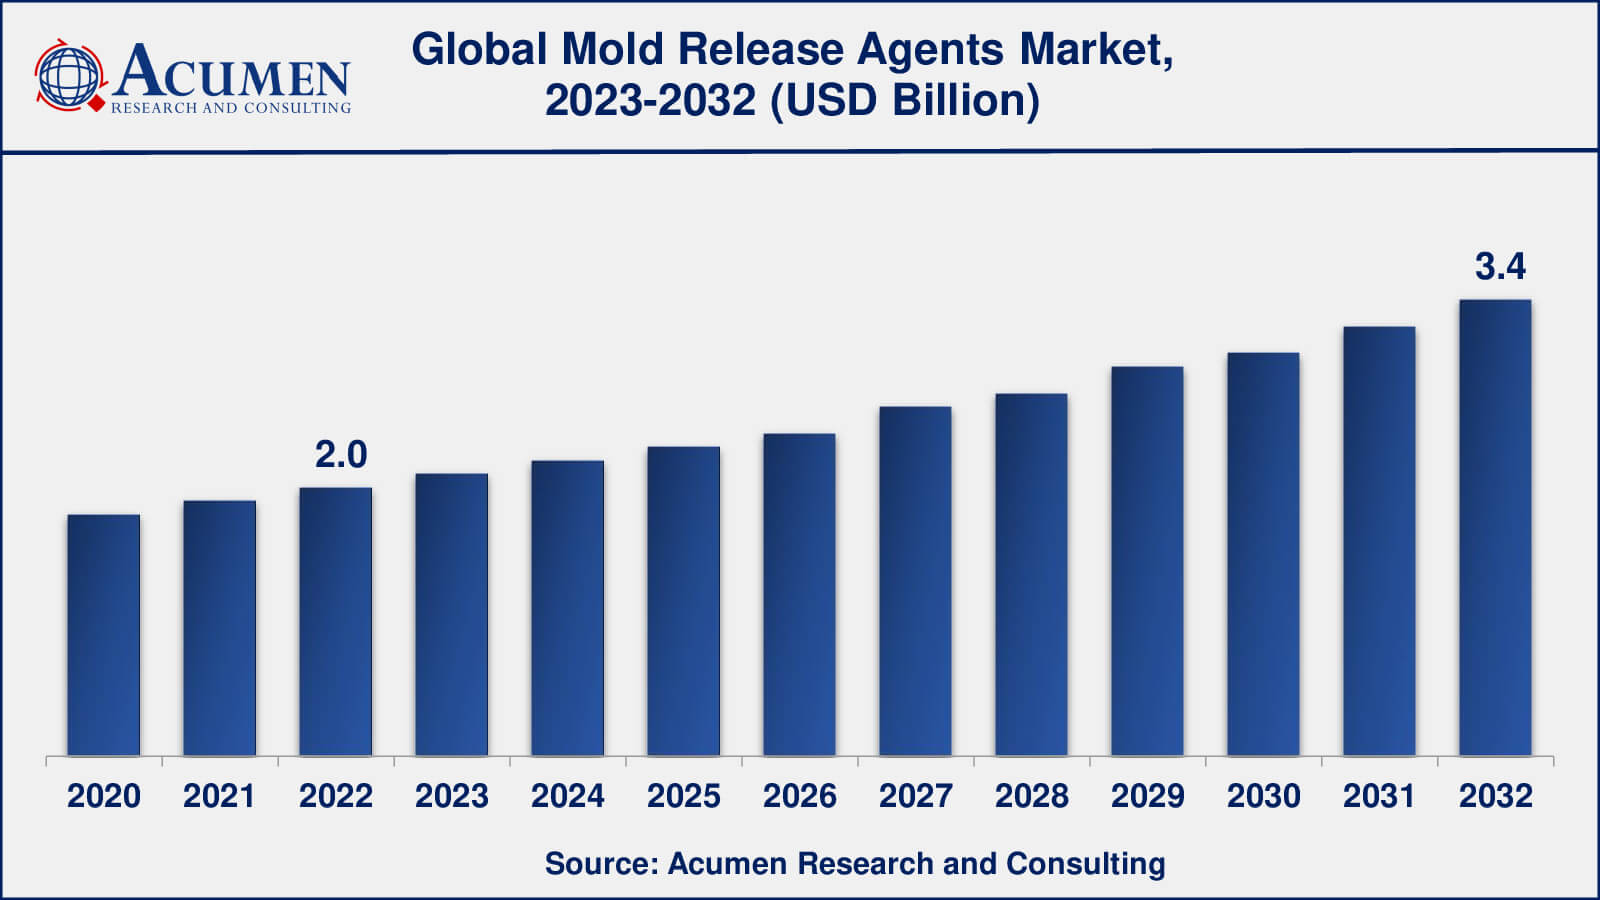 Global Mold Release Agents Market Dynamics